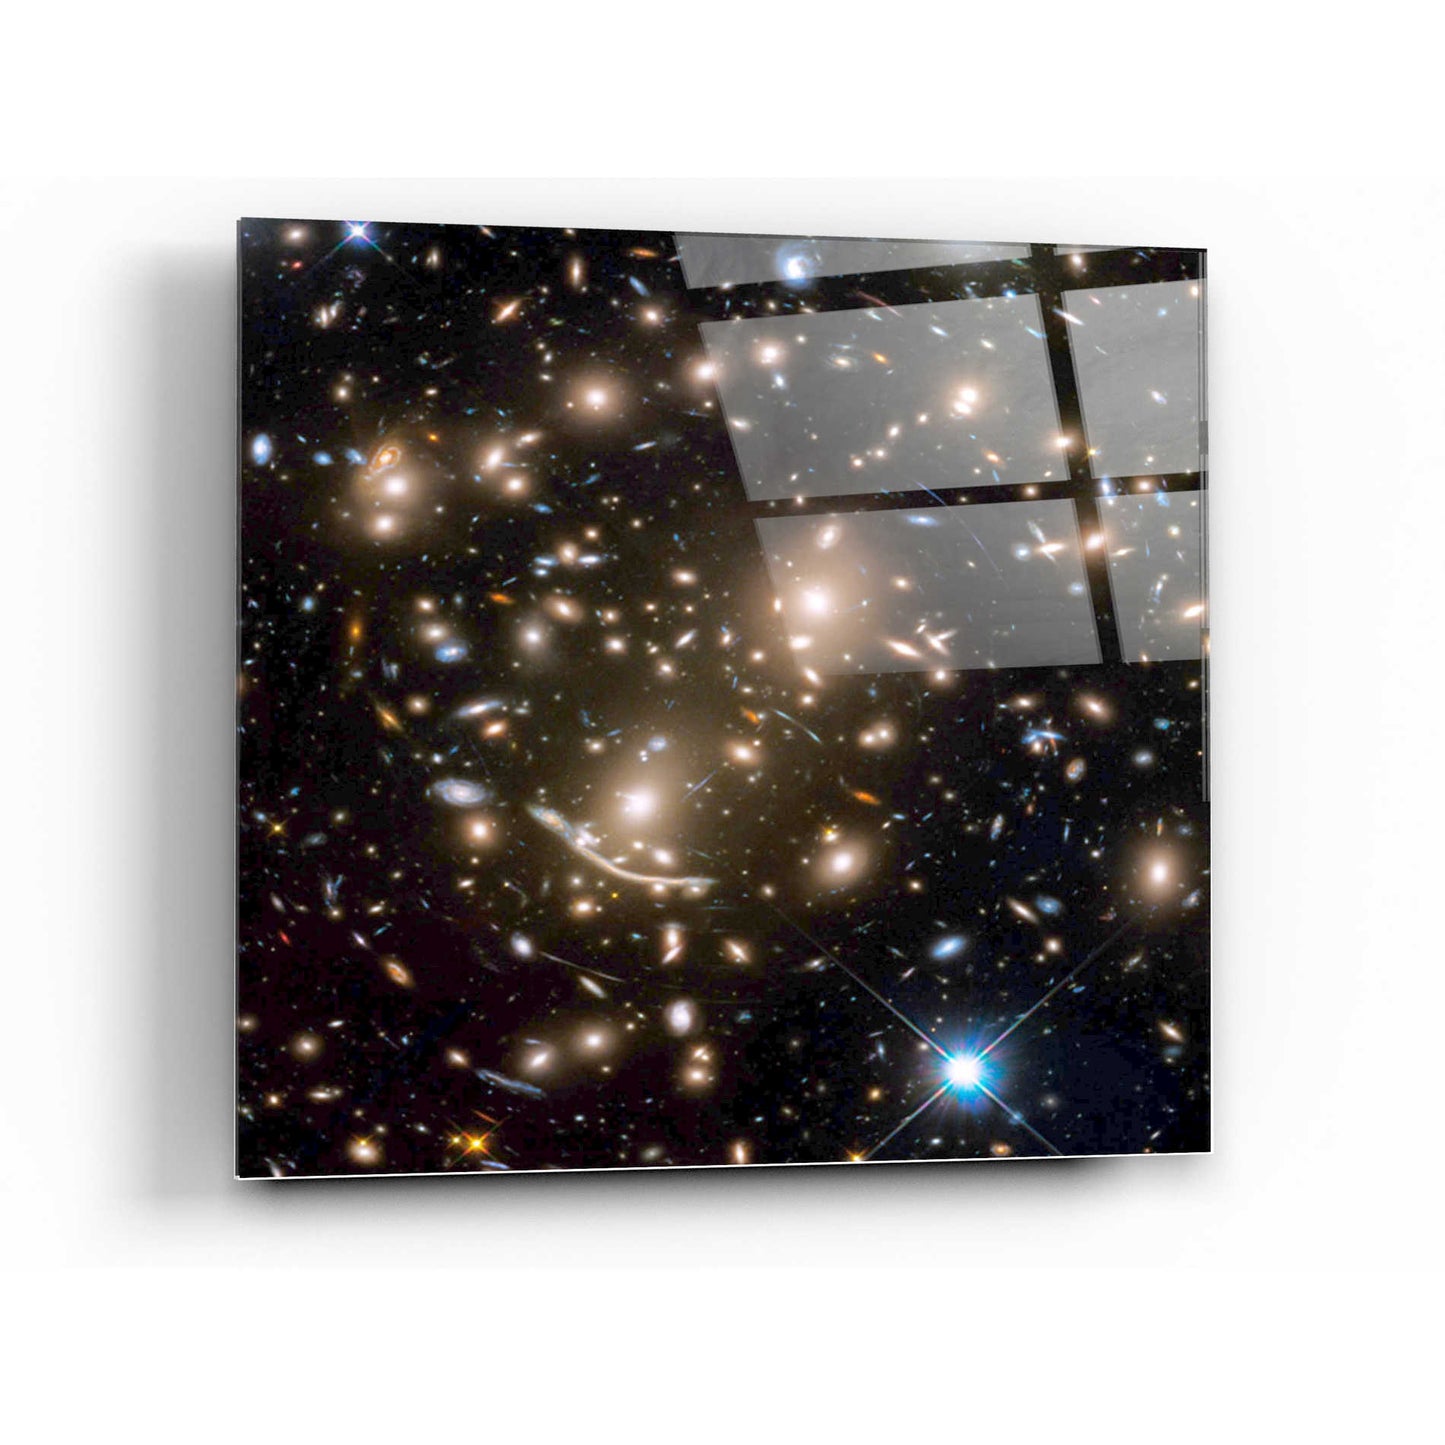 Epic Art "Abell 370" Hubble Space Telescope Acrylic Glass Wall Art,24x24